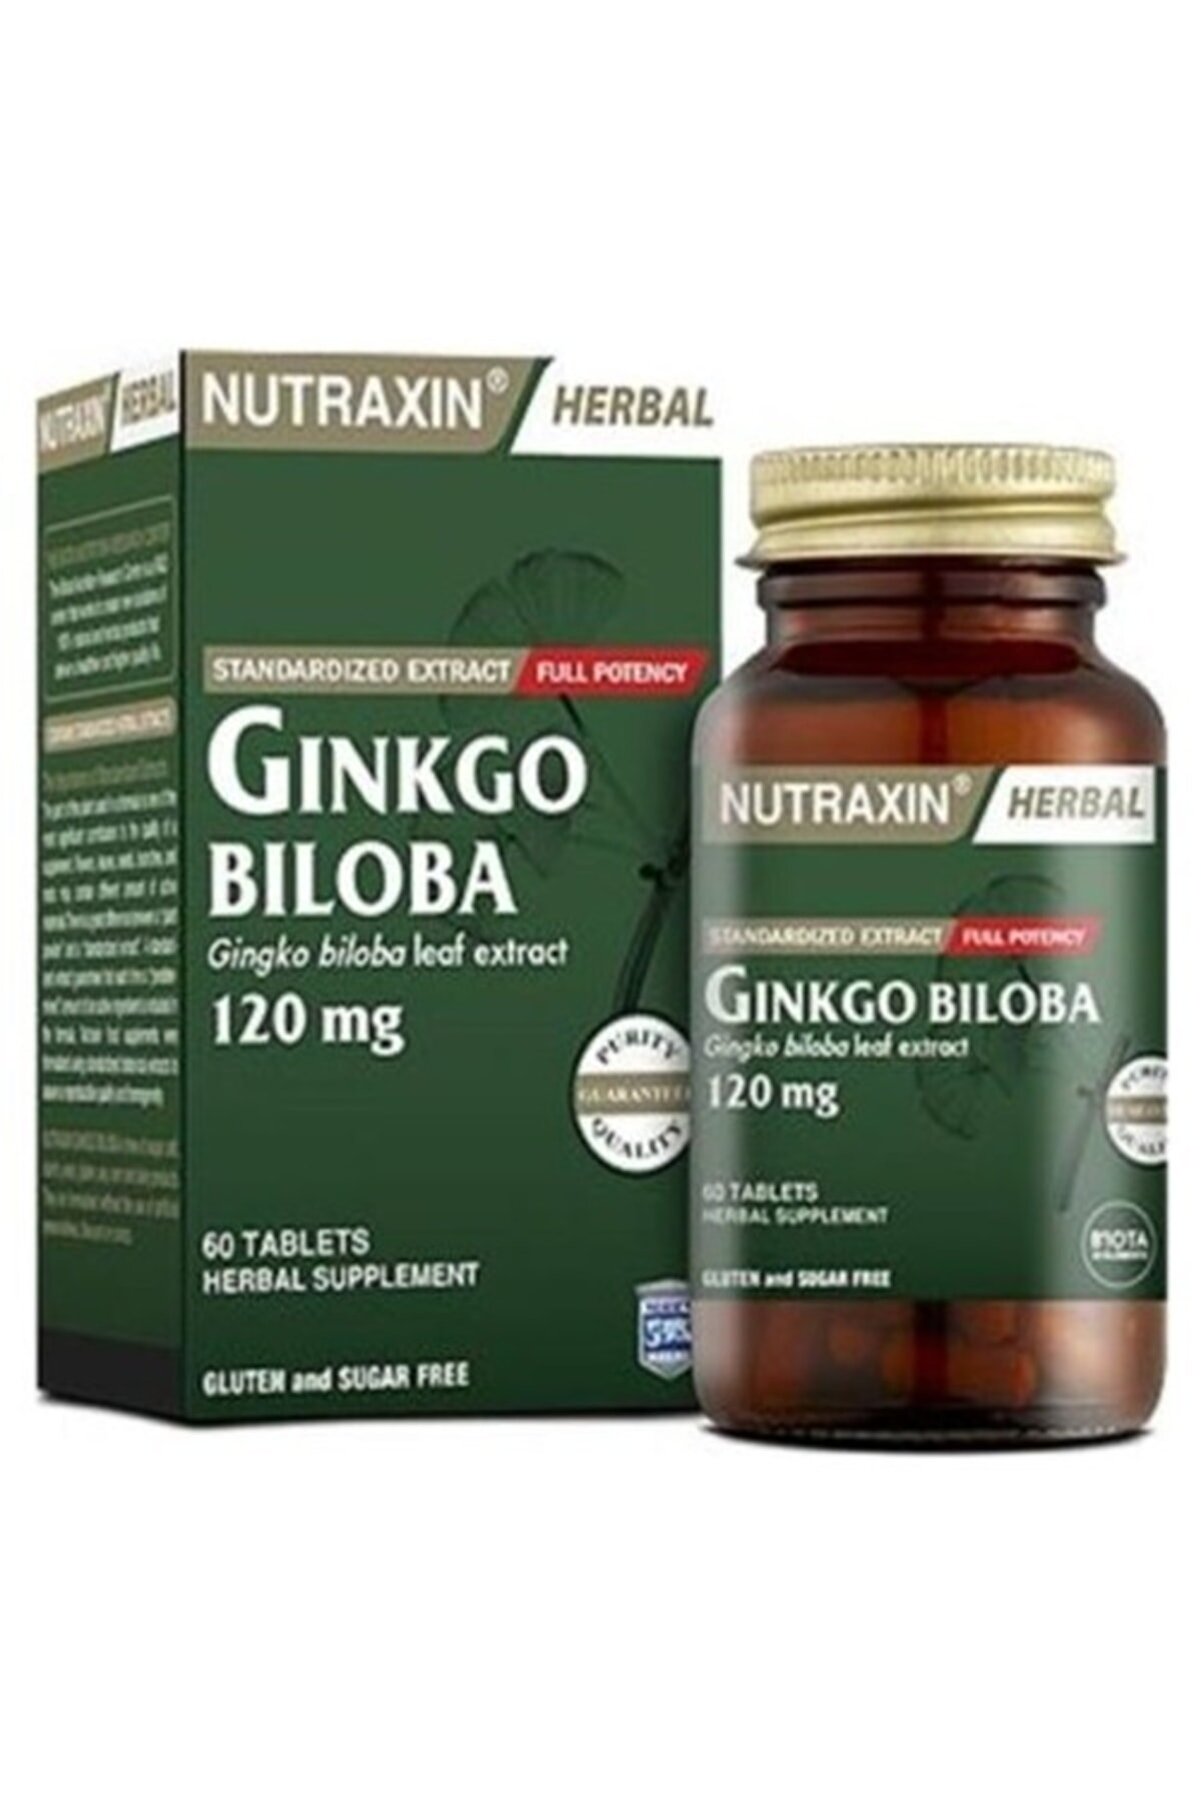 Nutraxin Herbal Ginkgo Biloba 120mg 60 Tablet